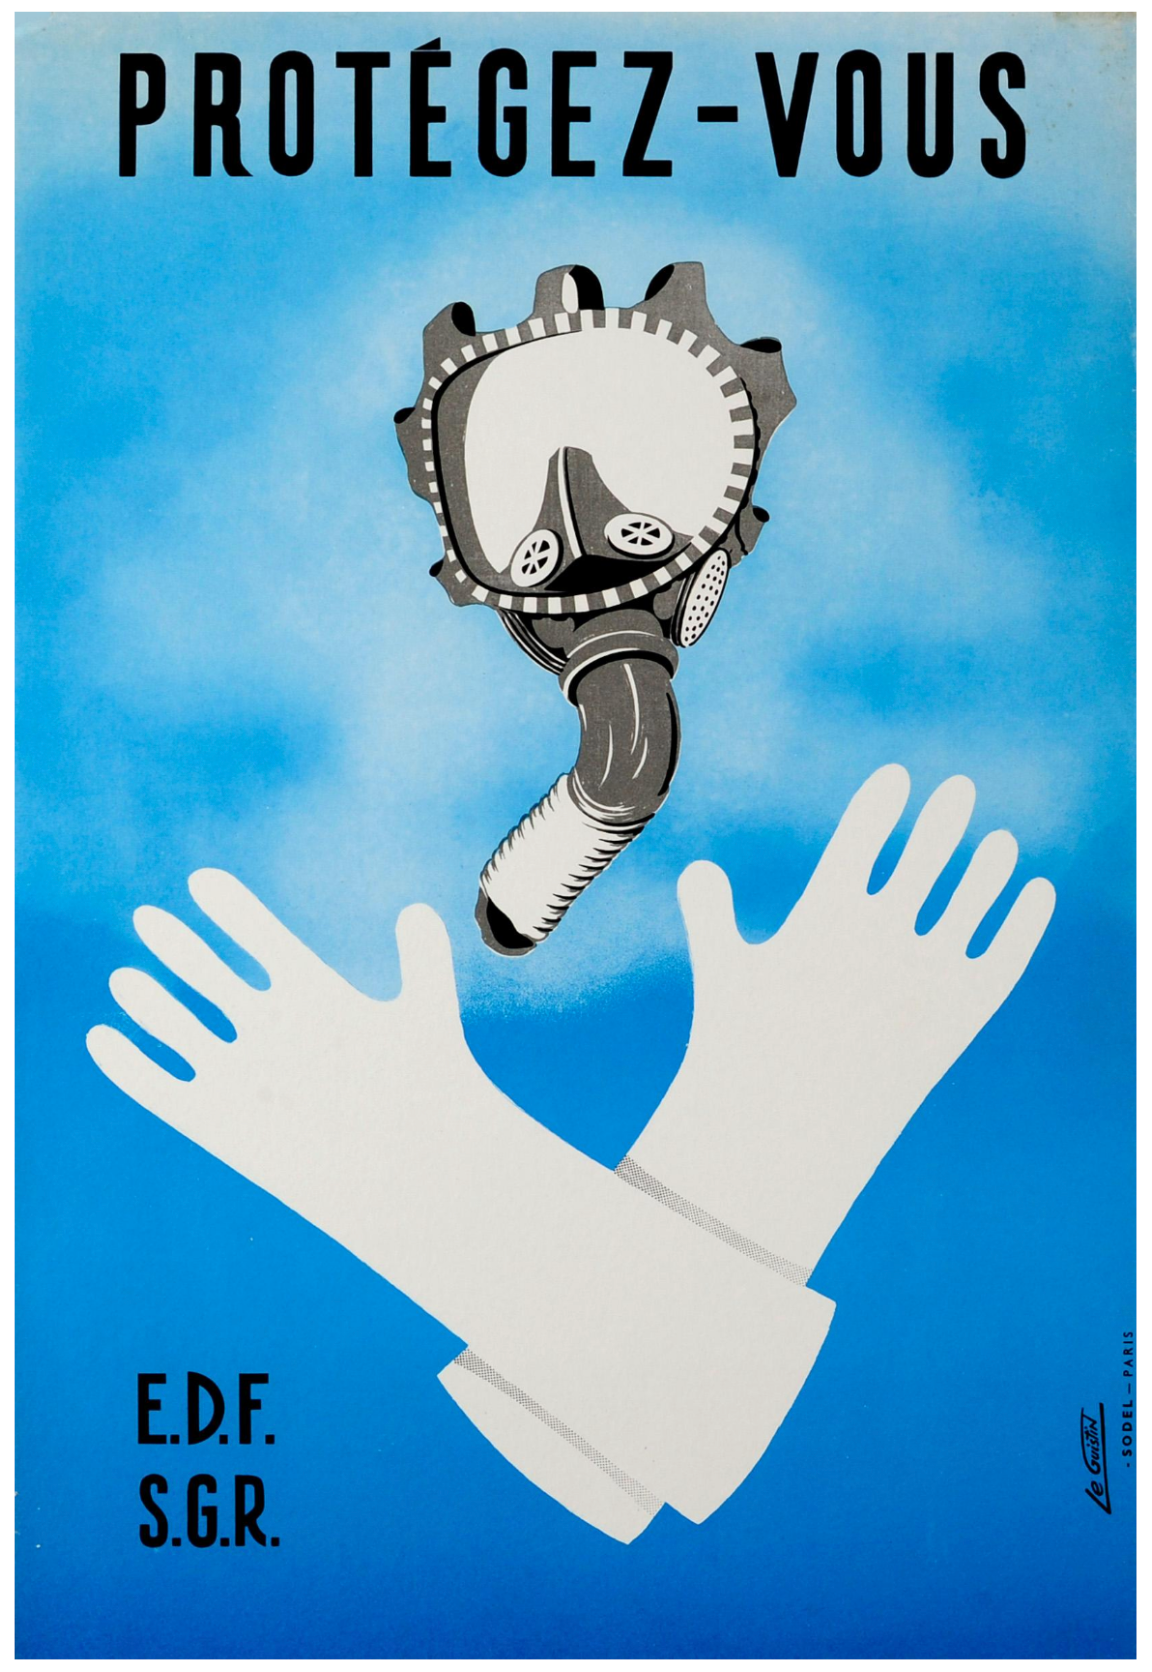 “Protegez vouz” - Propaganda Poster, Paris, ca. 1940.